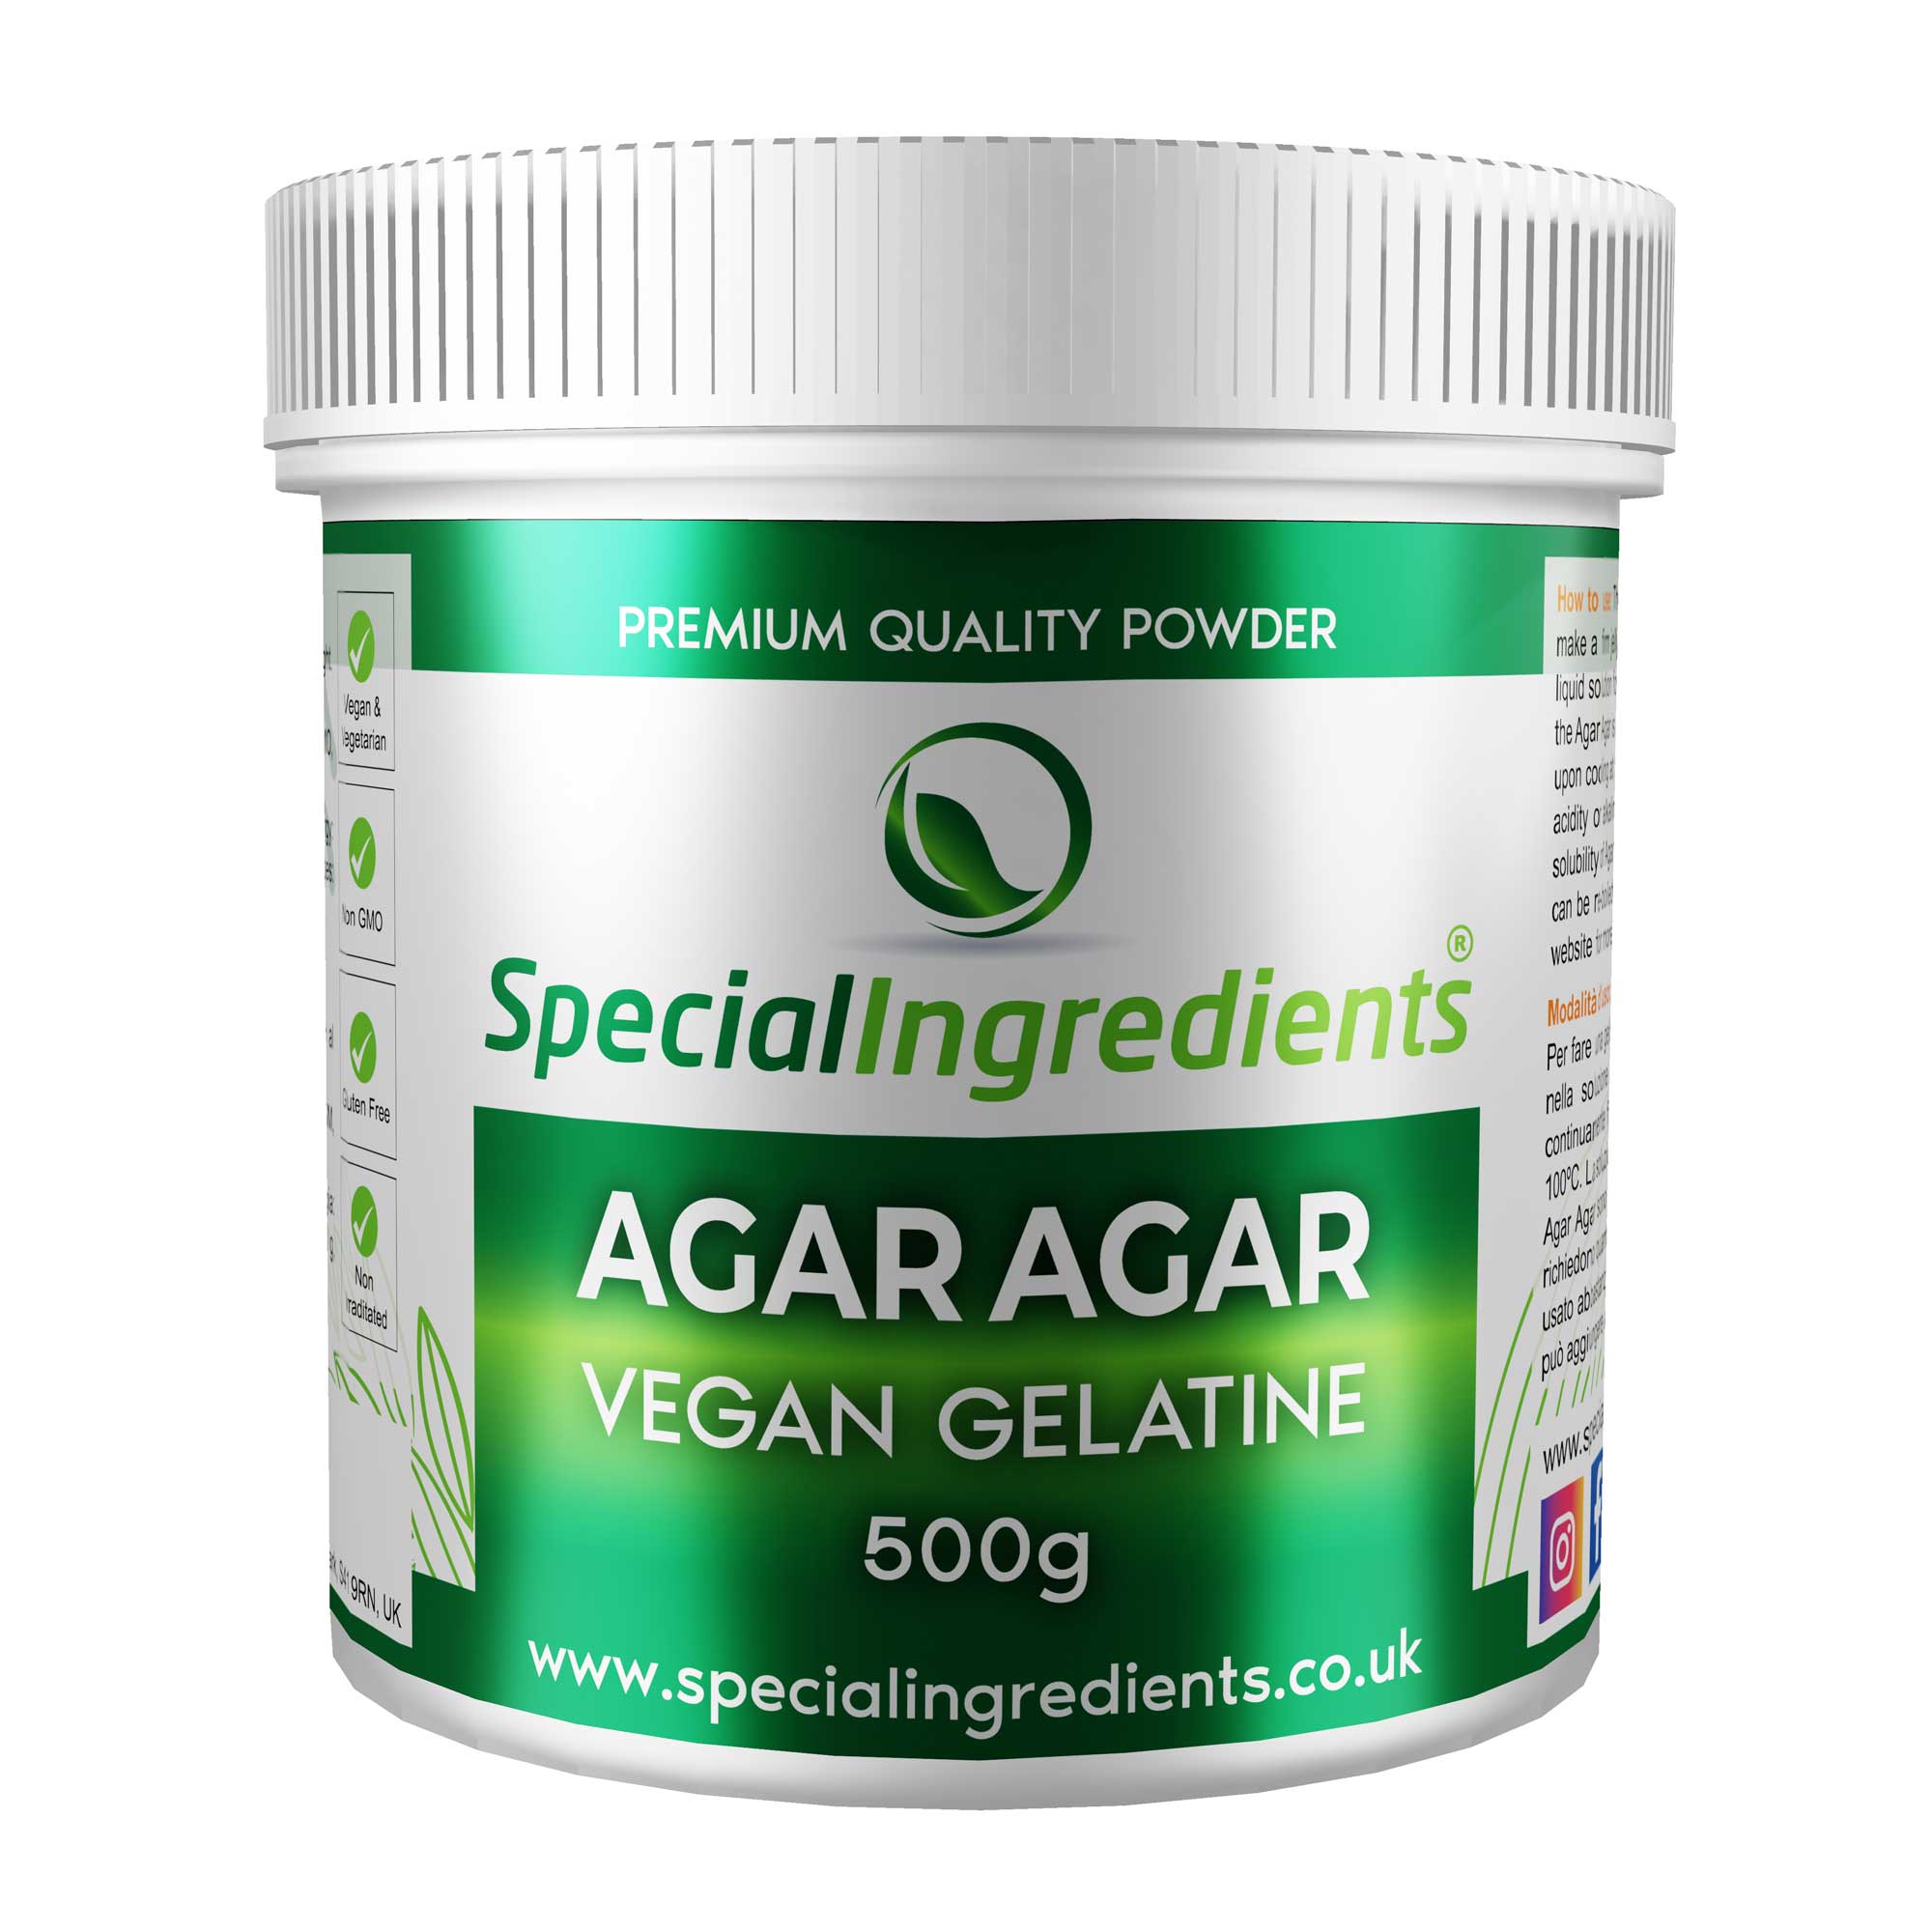 Buy Sodium Alginate Powder 500 grams